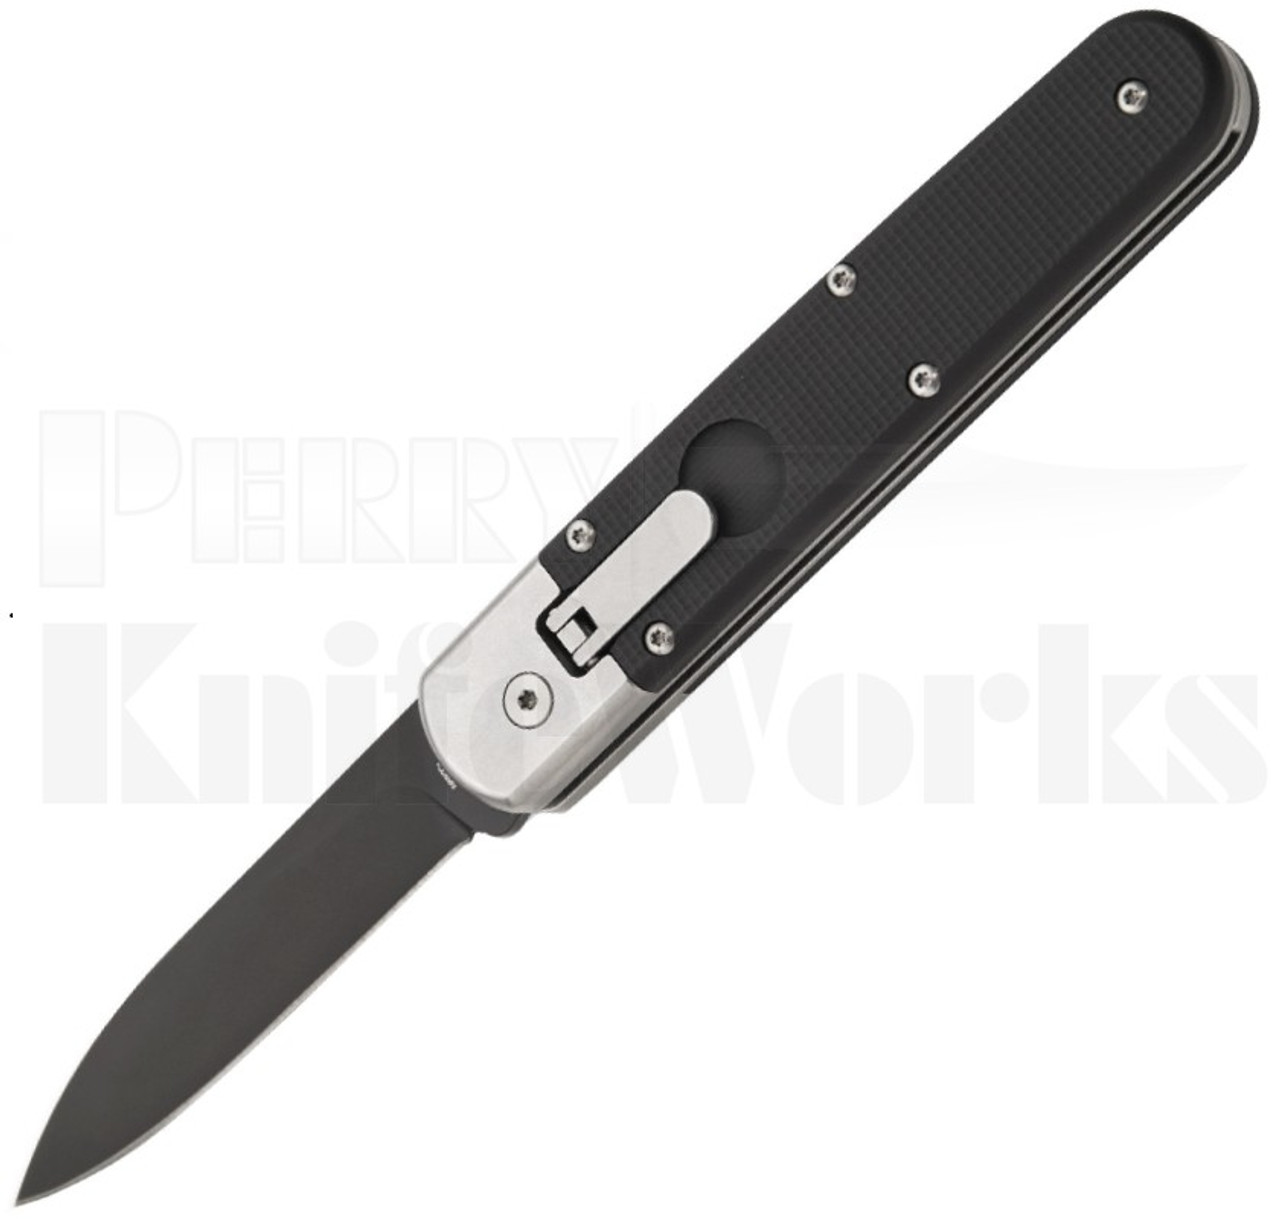 AGA Campolin Baron Elite Automatic Knife Black l Black Blade l For Sale